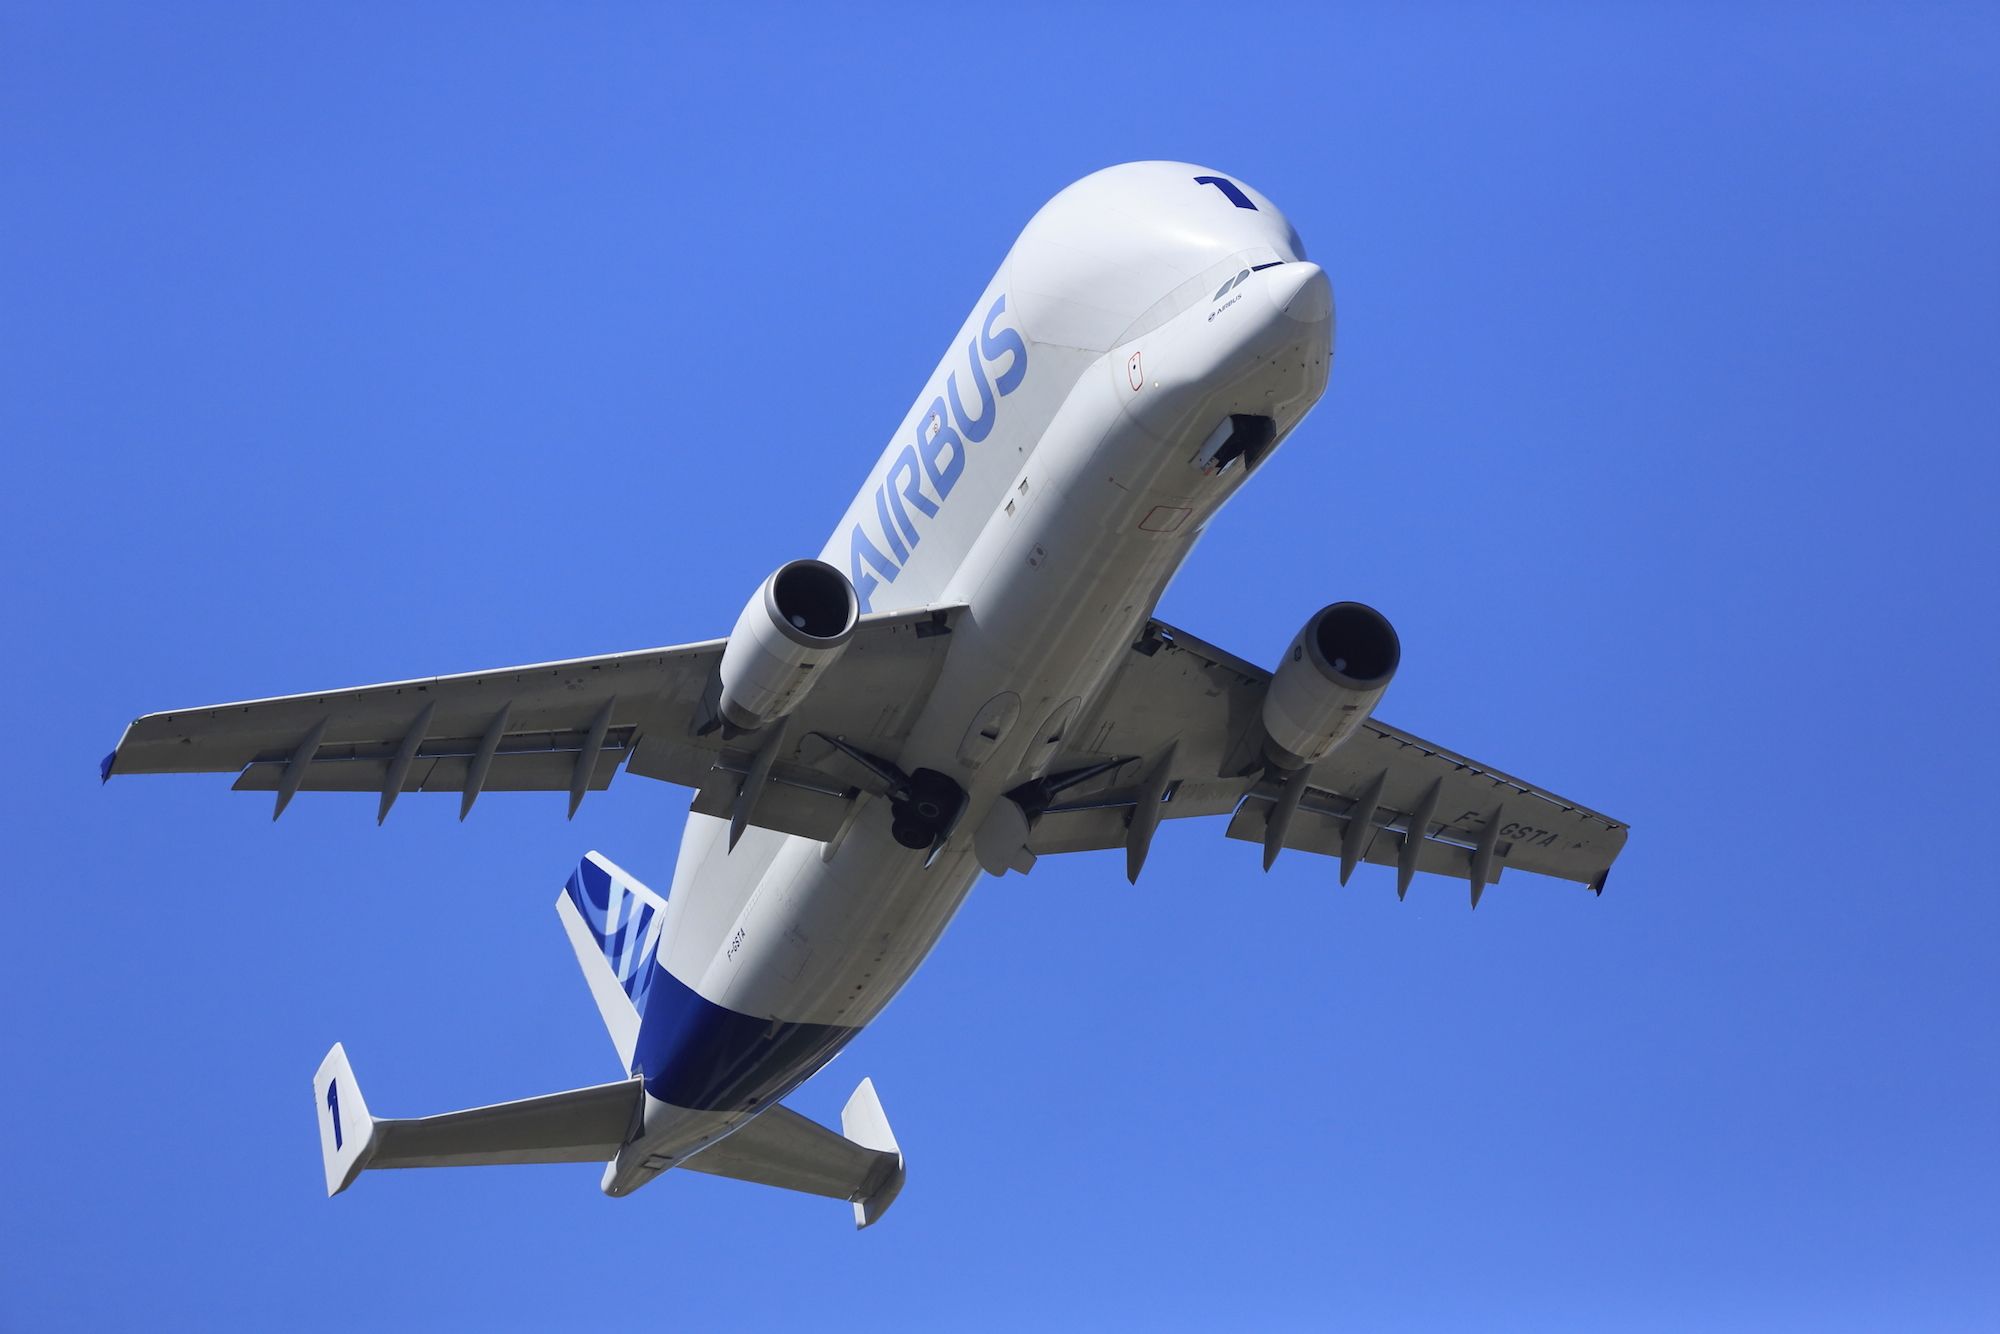 The world's strangest-looking airplane turns 20 | CNN